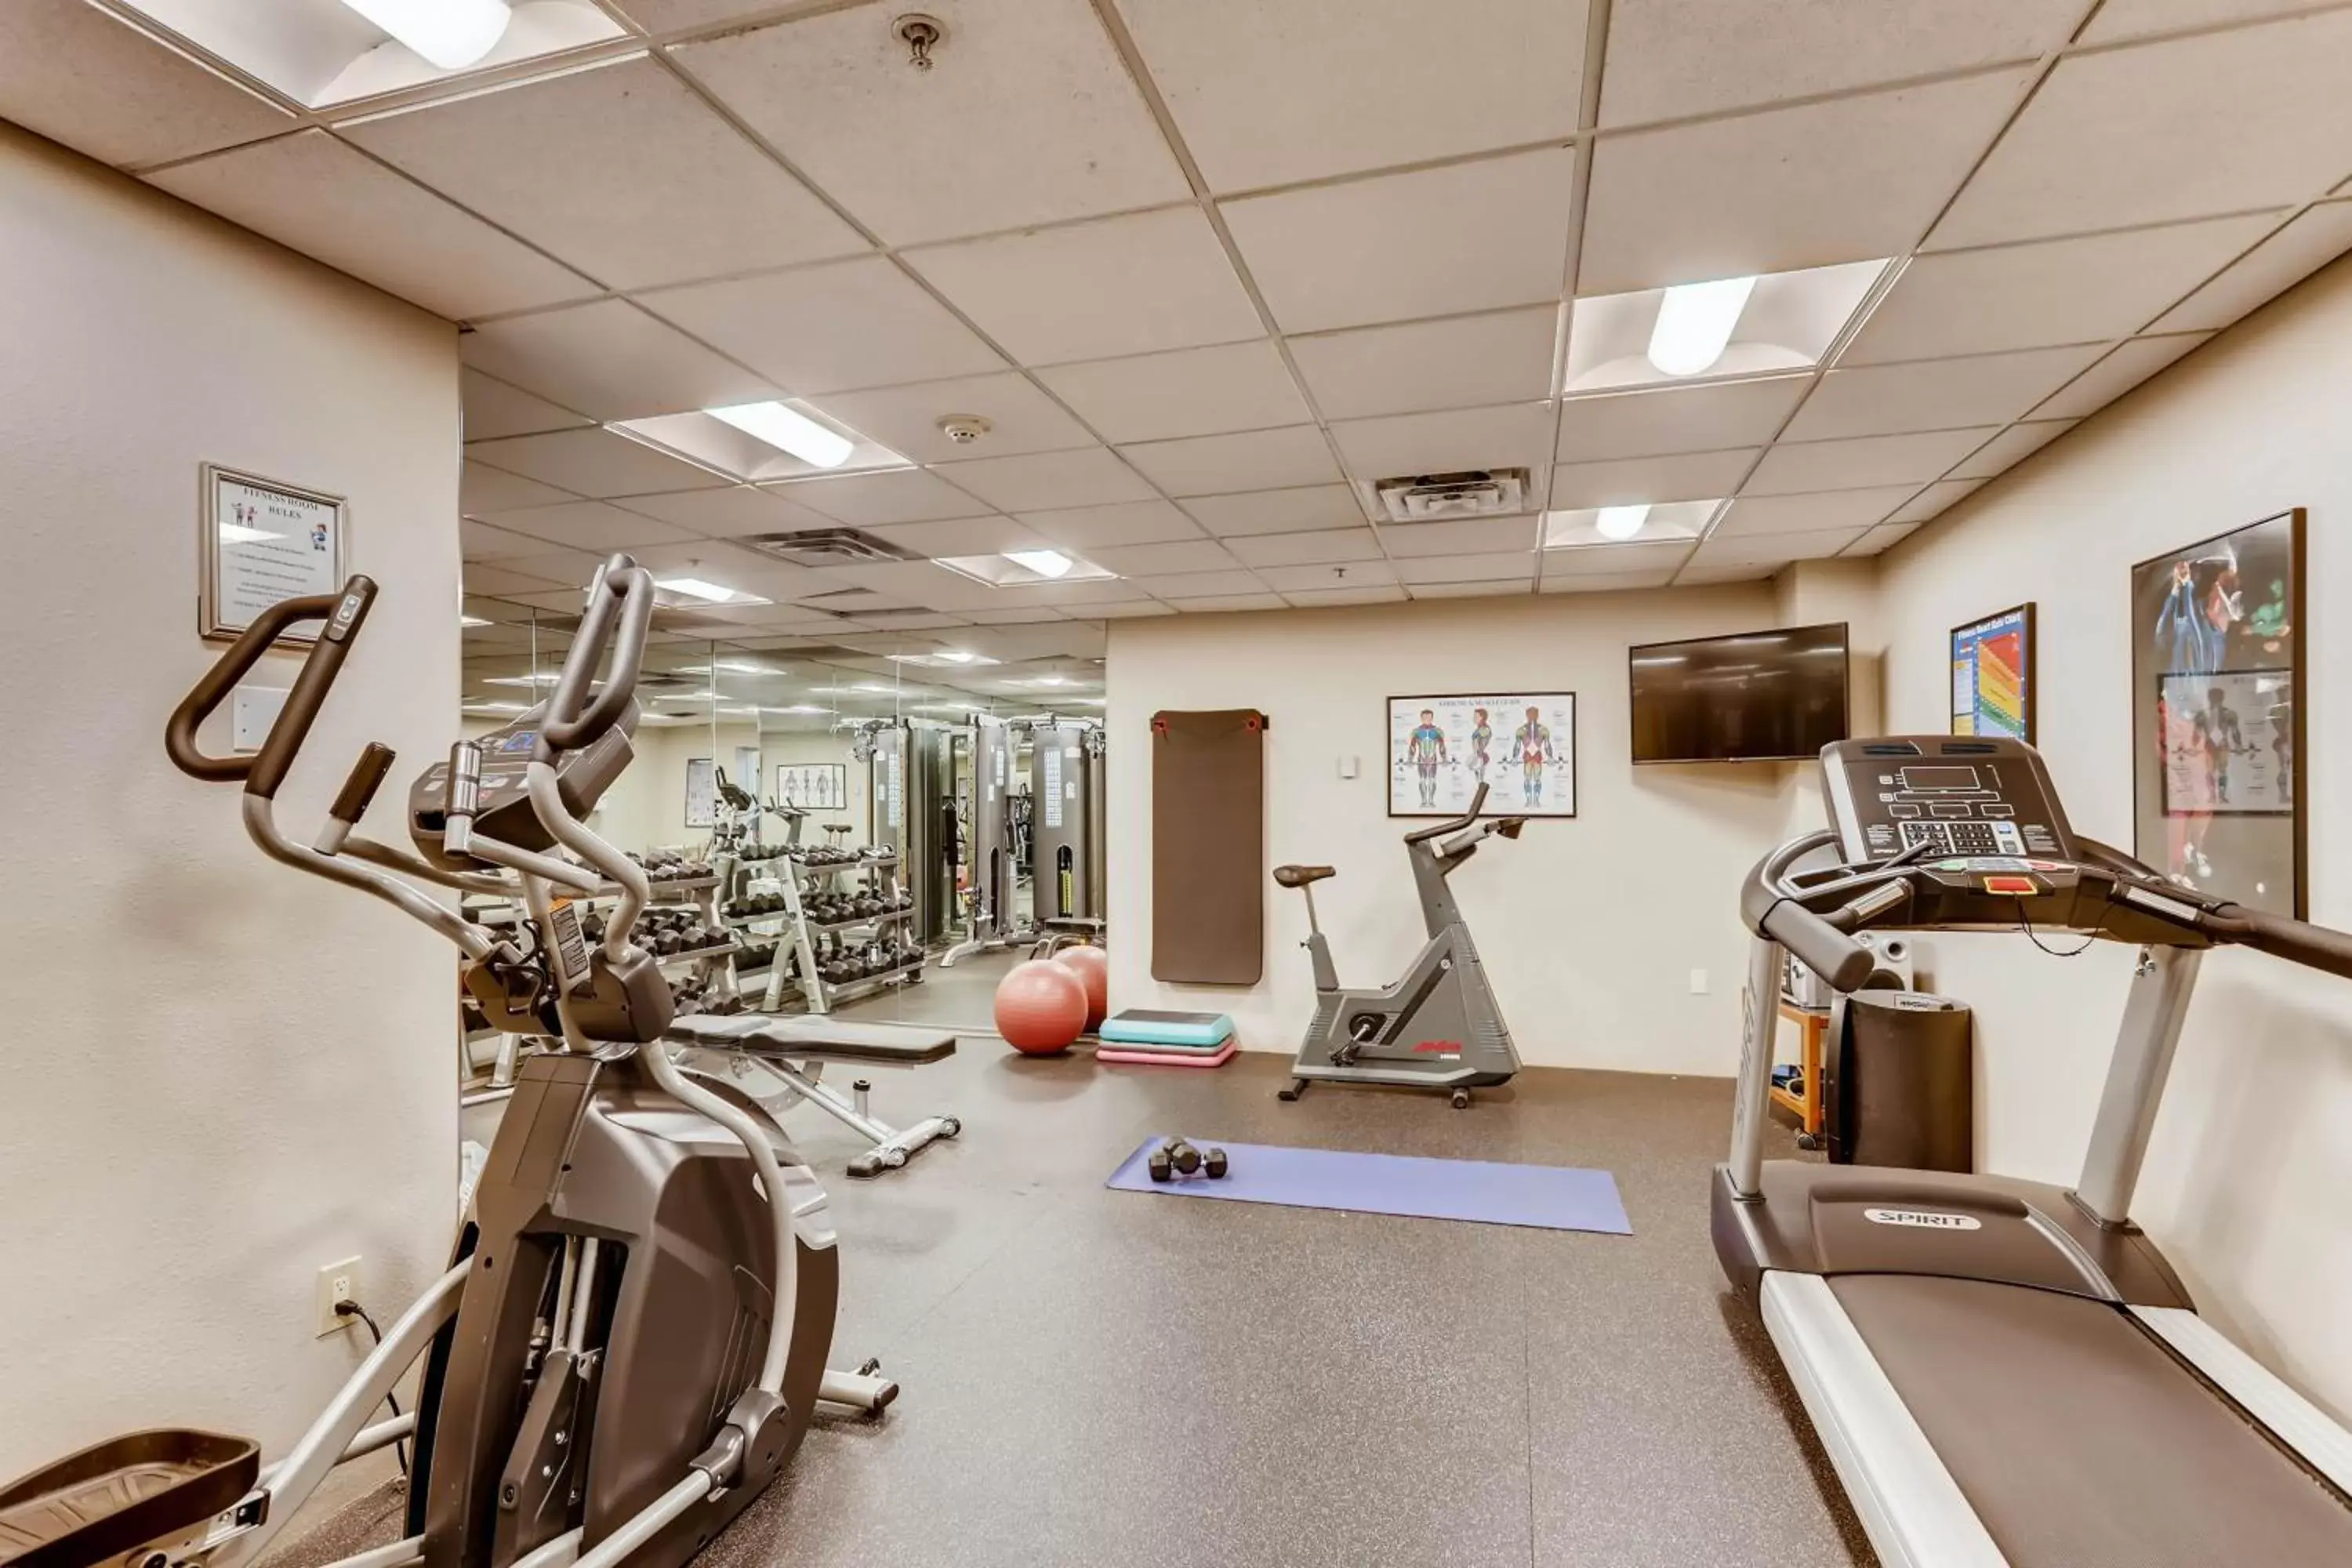 Fitness centre/facilities, Fitness Center/Facilities in Simba Run Vail Condominiums